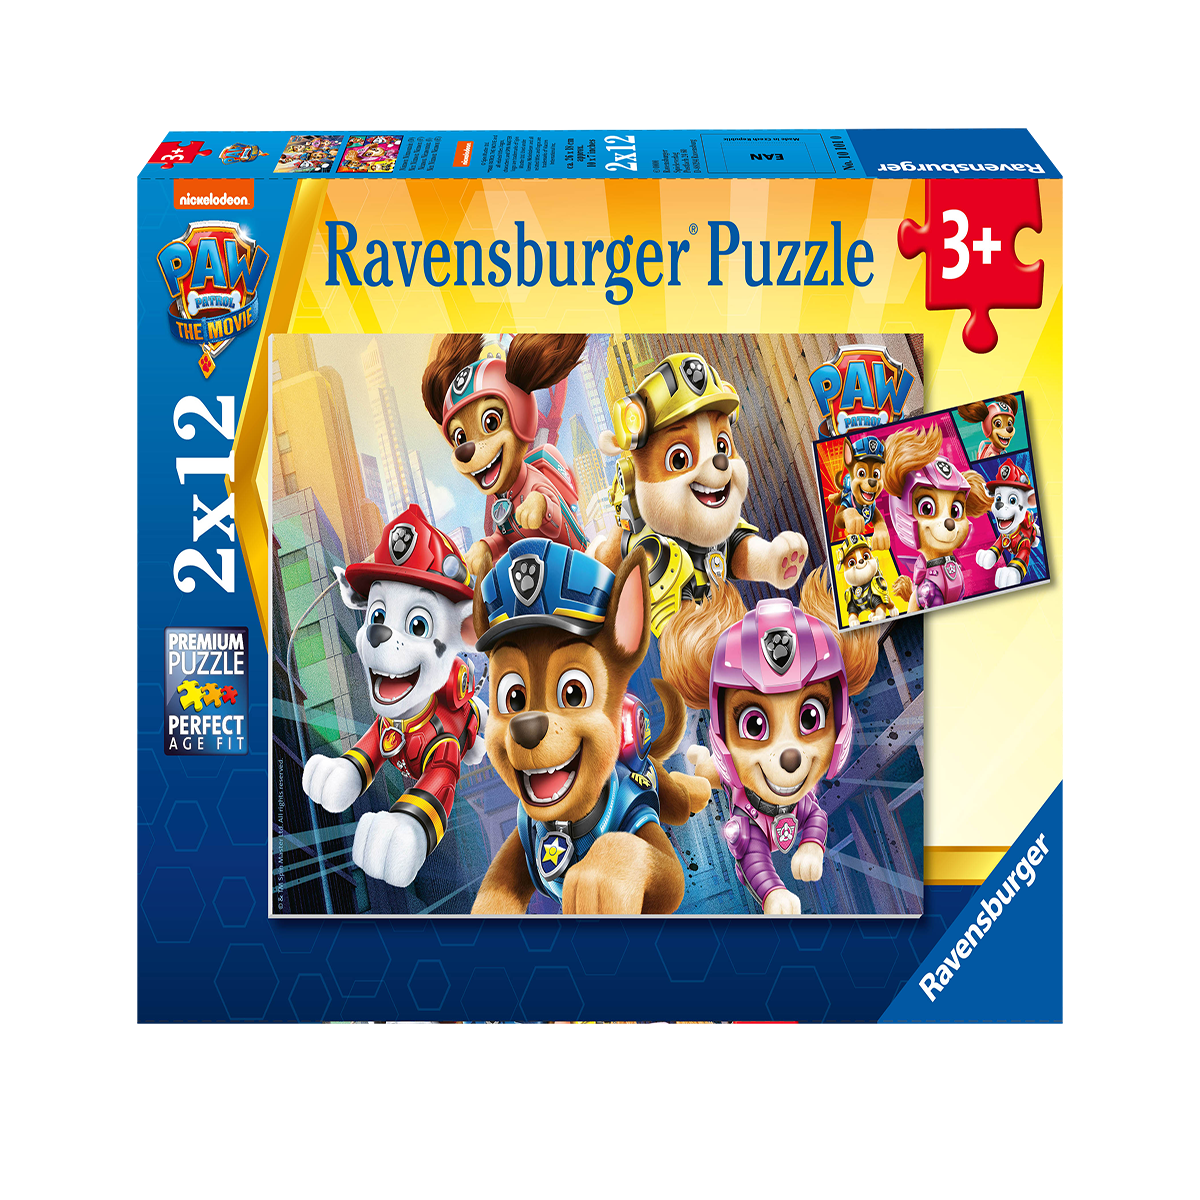 Ravensburger 2 puzzle 12 pezzi - paw patrol movie - RAVENSBURGER, Paw Patrol